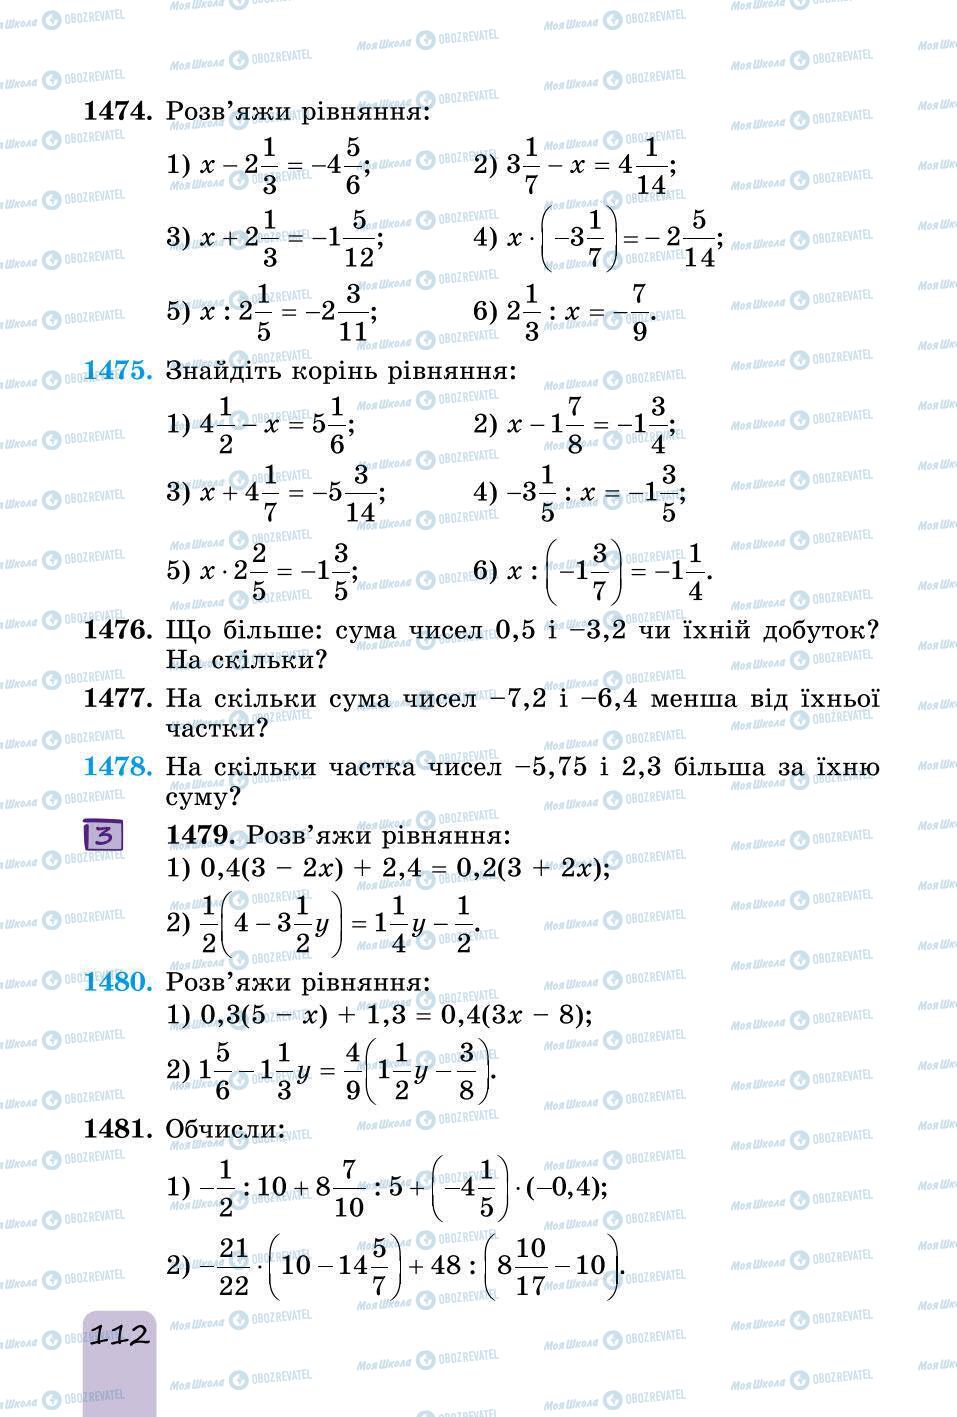 Учебники Математика 6 класс страница 112